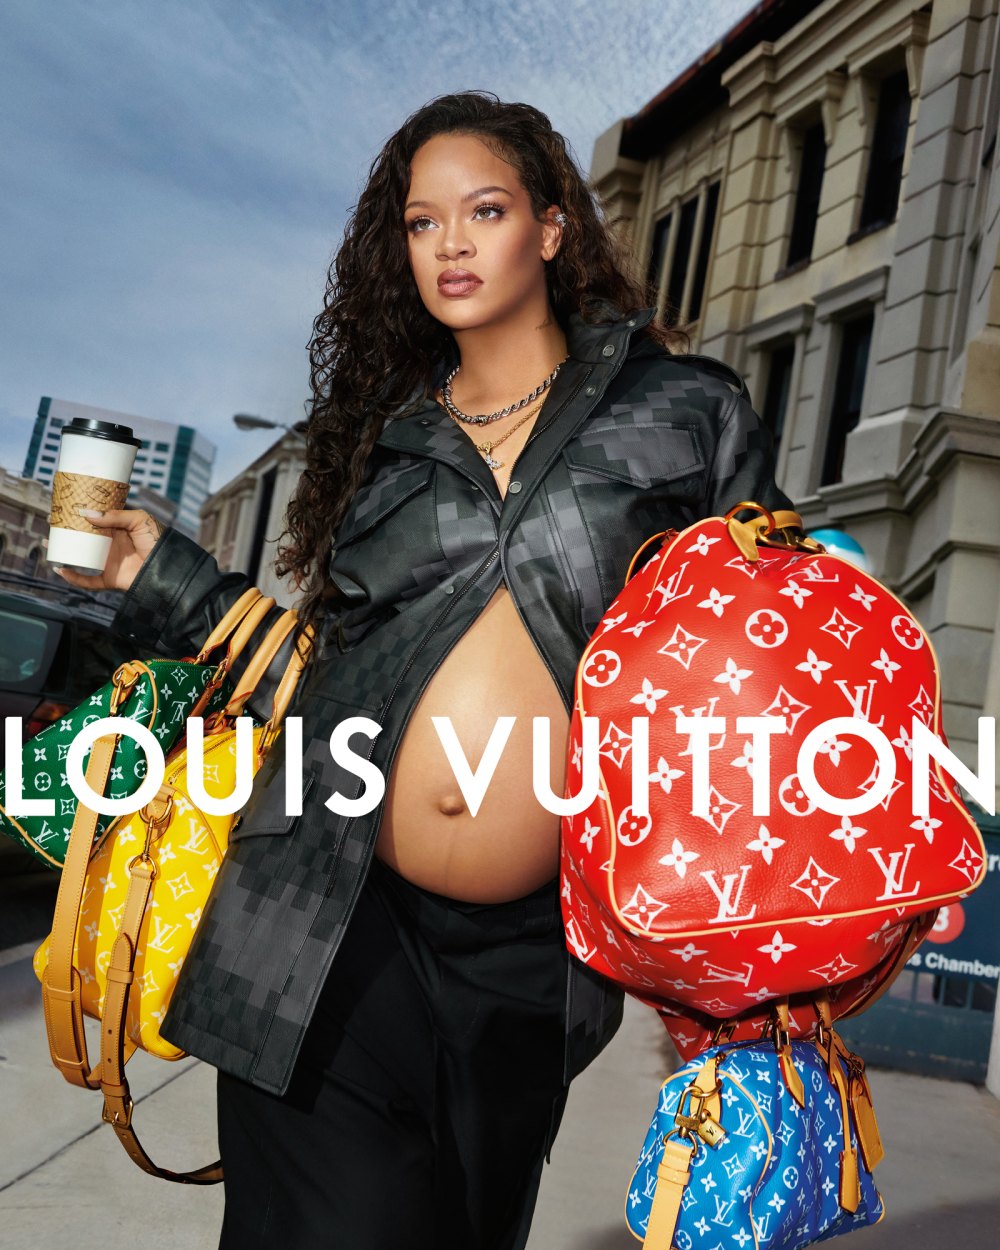 Louis Vuitton SS 2024 Pharrell Williams Campaign Starring Rihanna